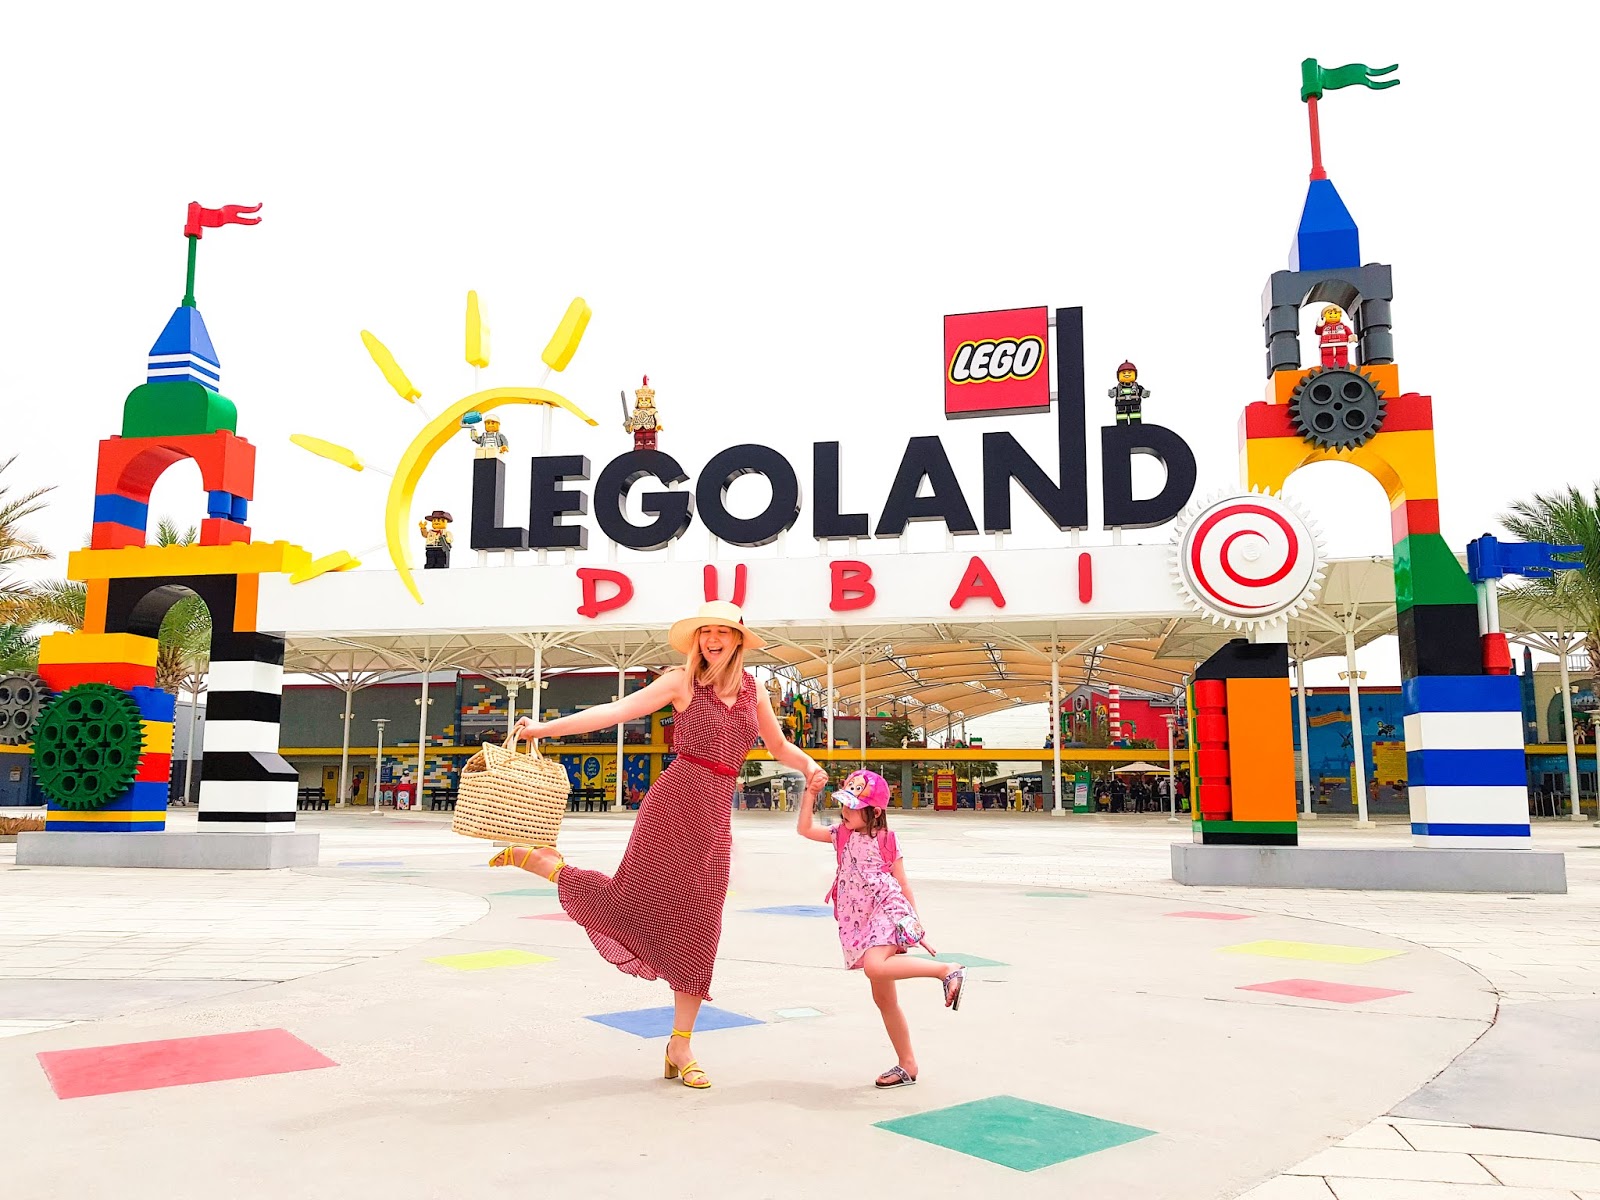 Dubai parks and resorts; #visitdubai #legoland #motiongate #dubaiparks #adventuretime #dubaj #smerfy #legodubaj #lego #legolanddubaj